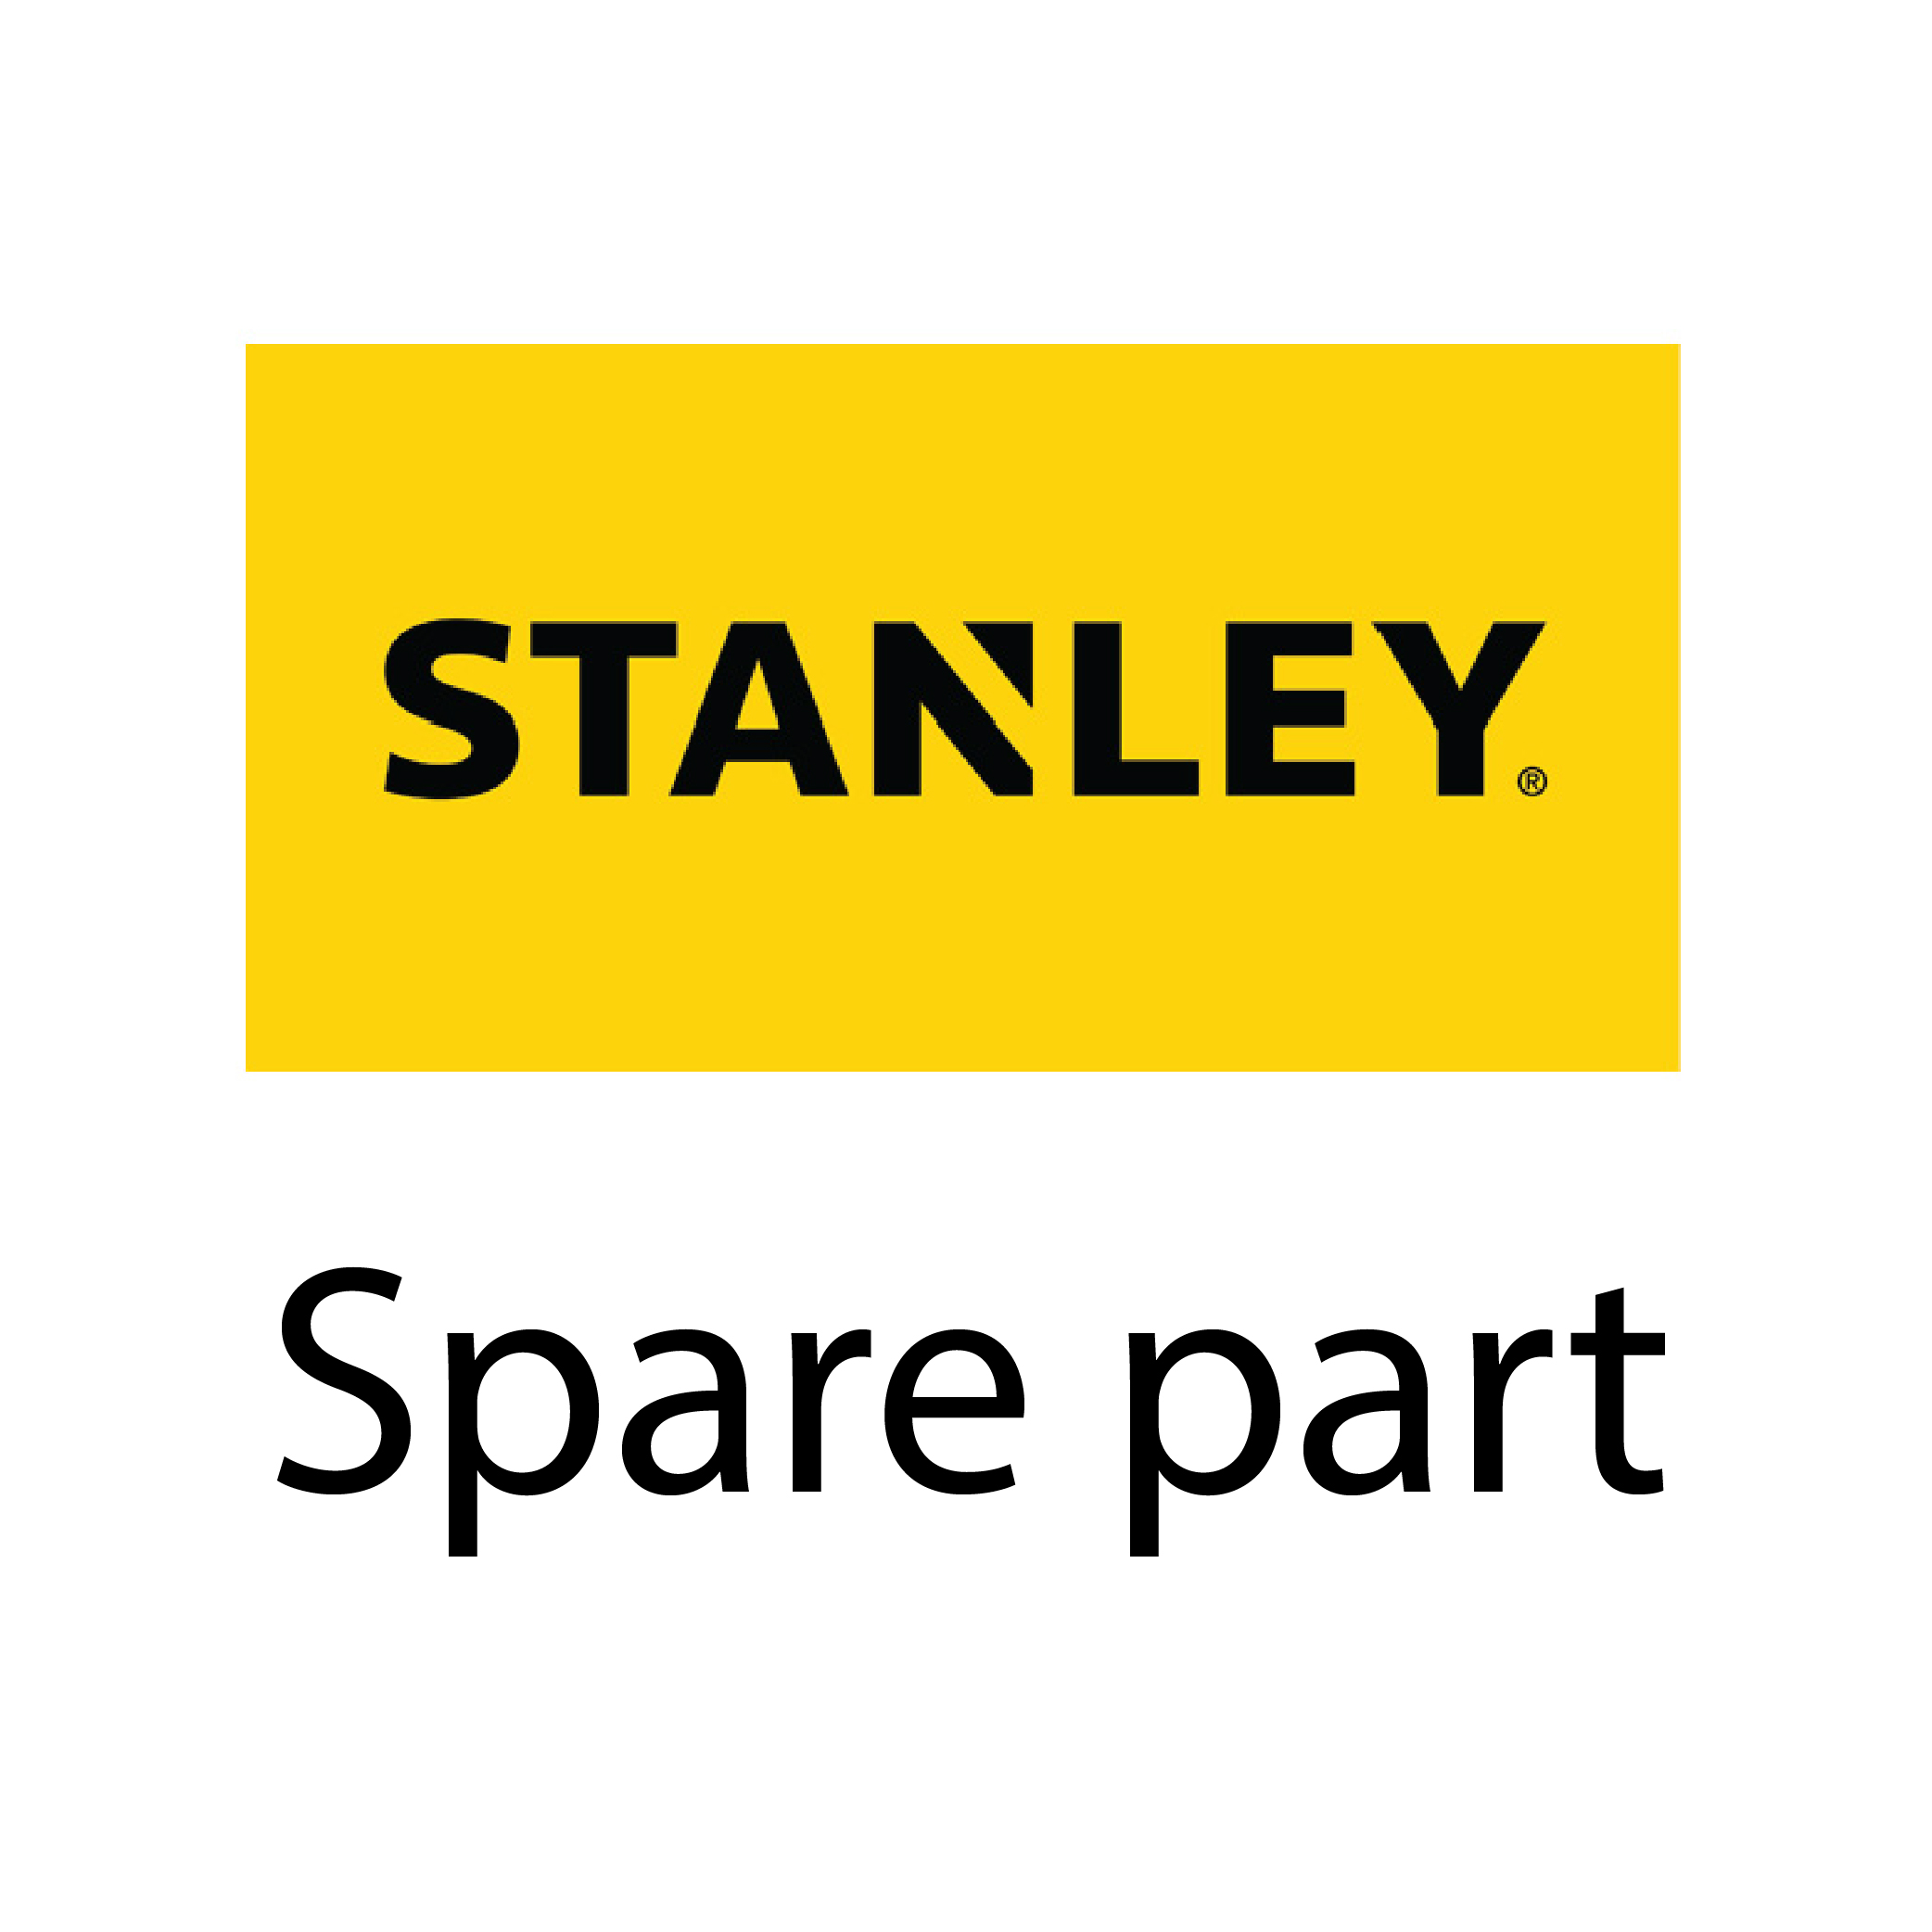 SKI - สกี จำหน่ายสินค้าหลากหลาย และคุณภาพดี | STANLEY #1004126-00 ทุ่น STEL680